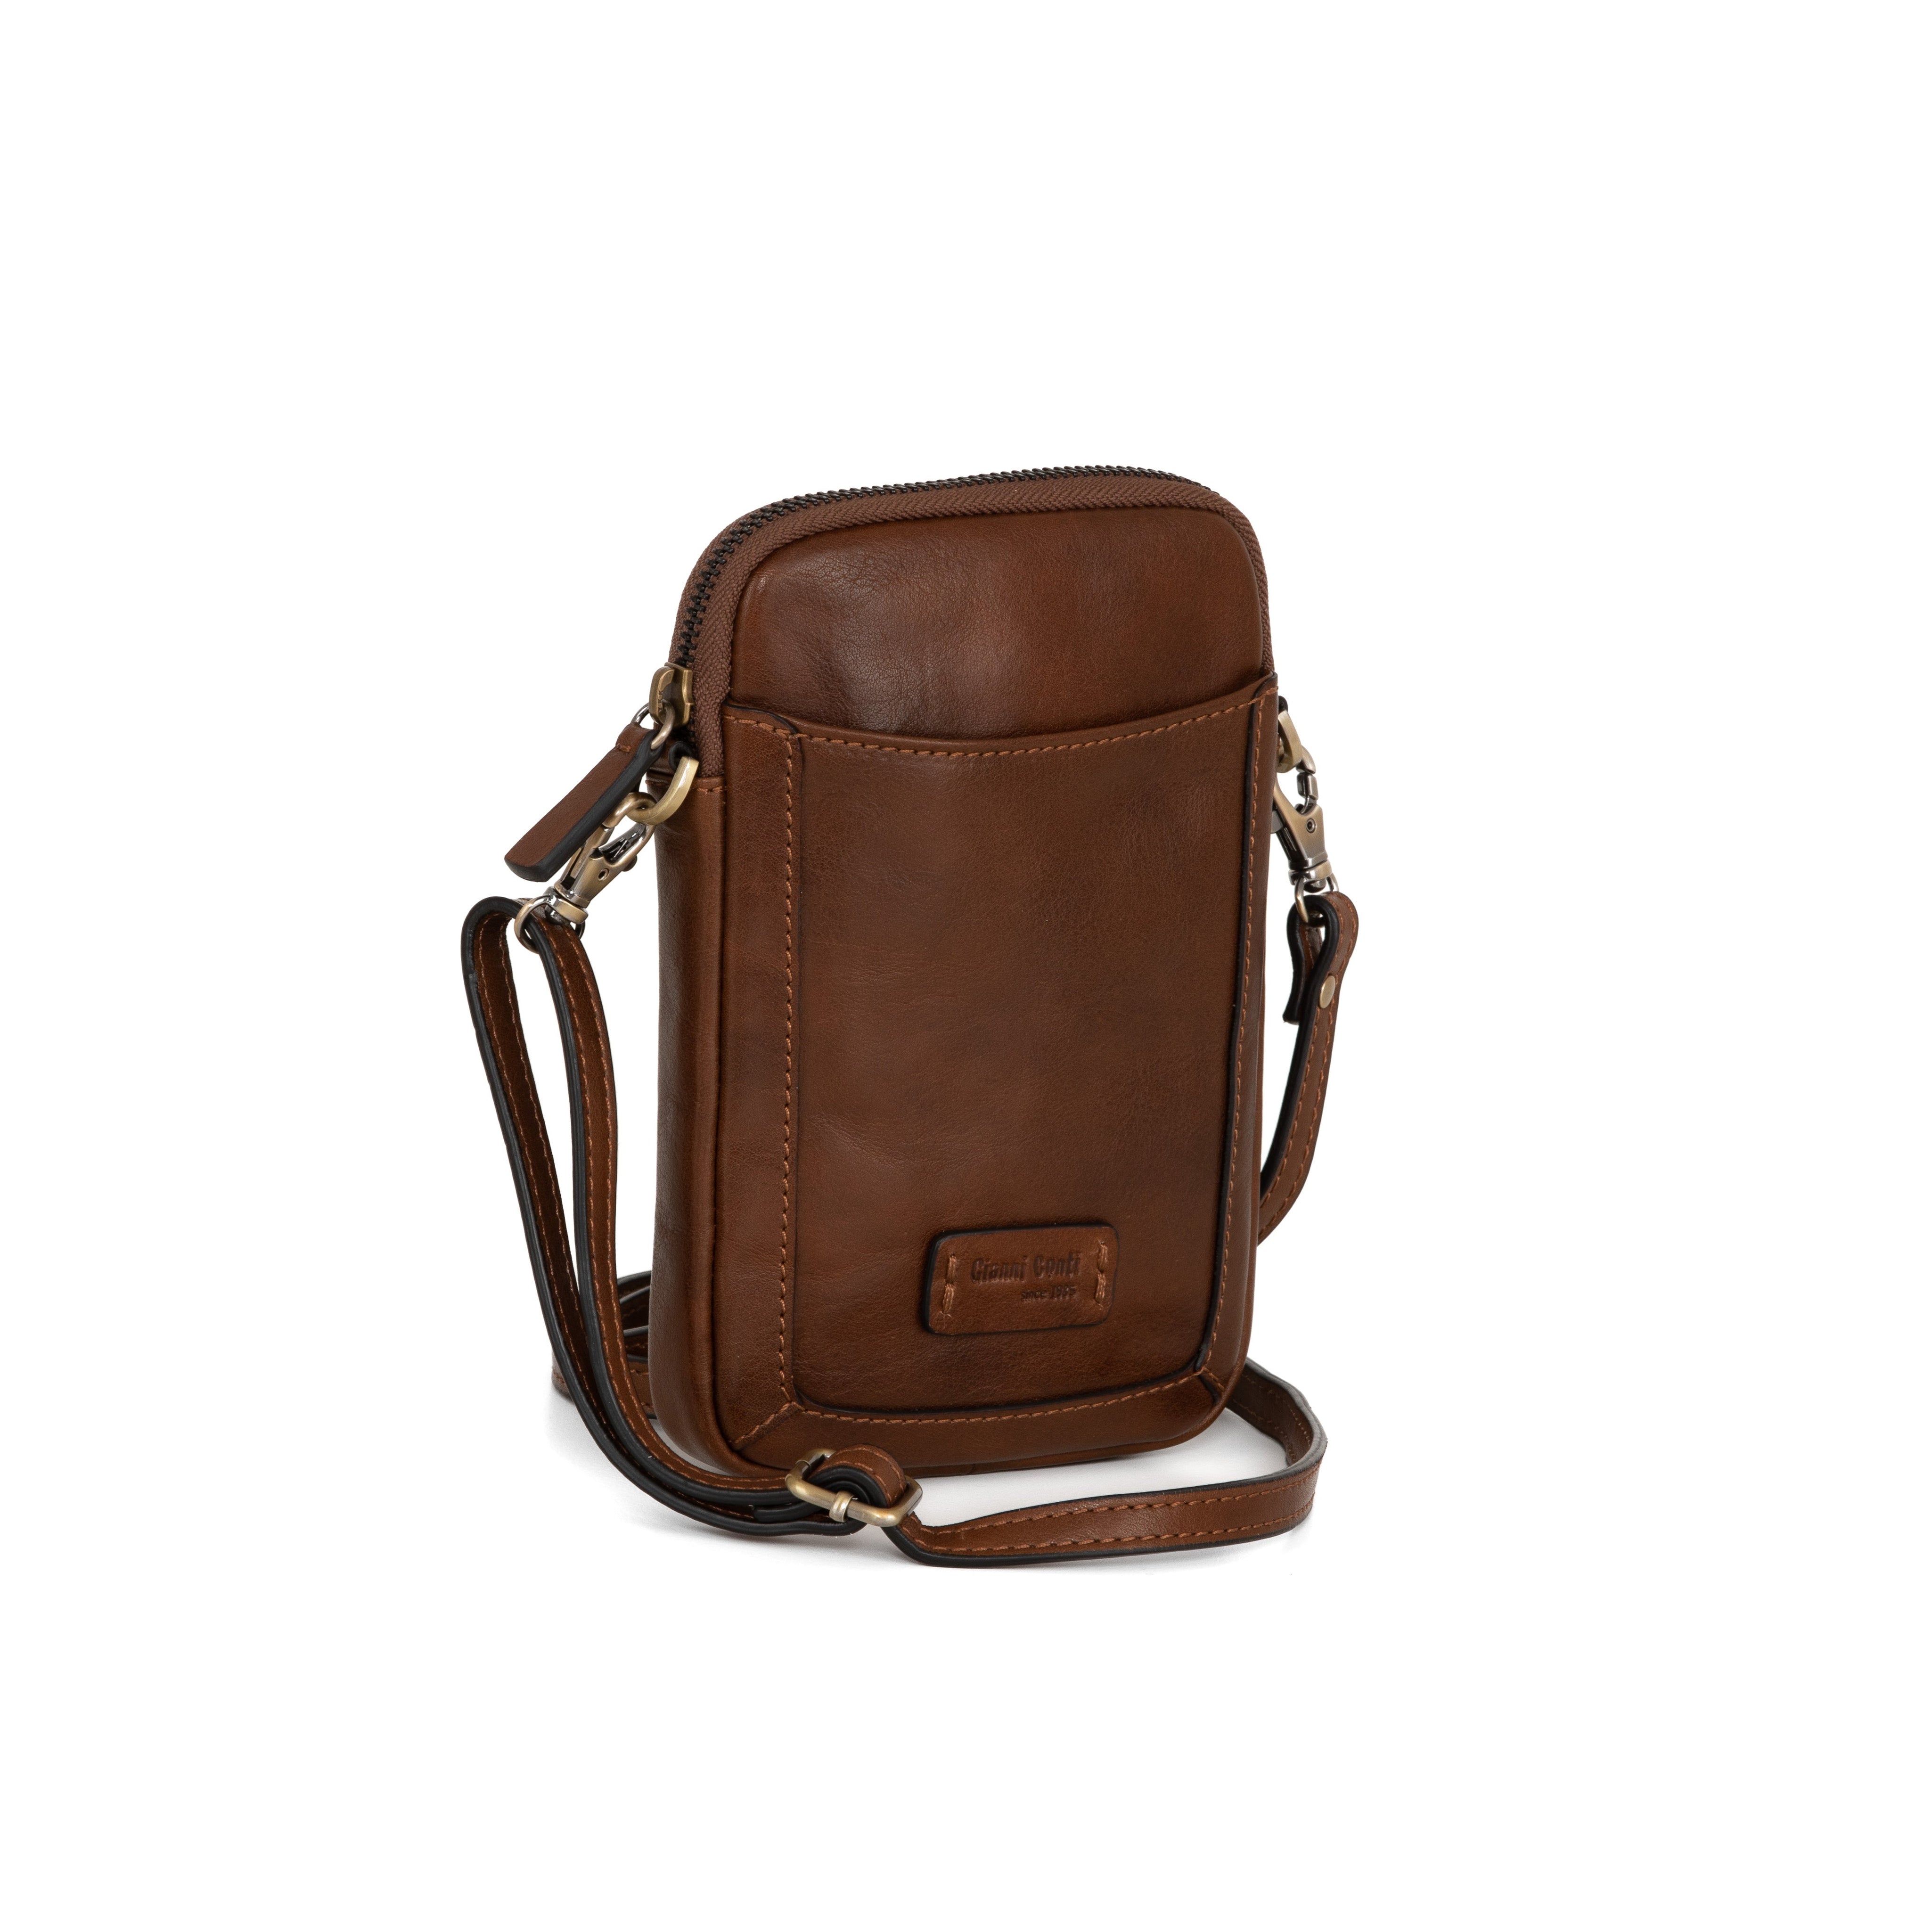 Gianni Conti VALTER Leather Shoulder Bag